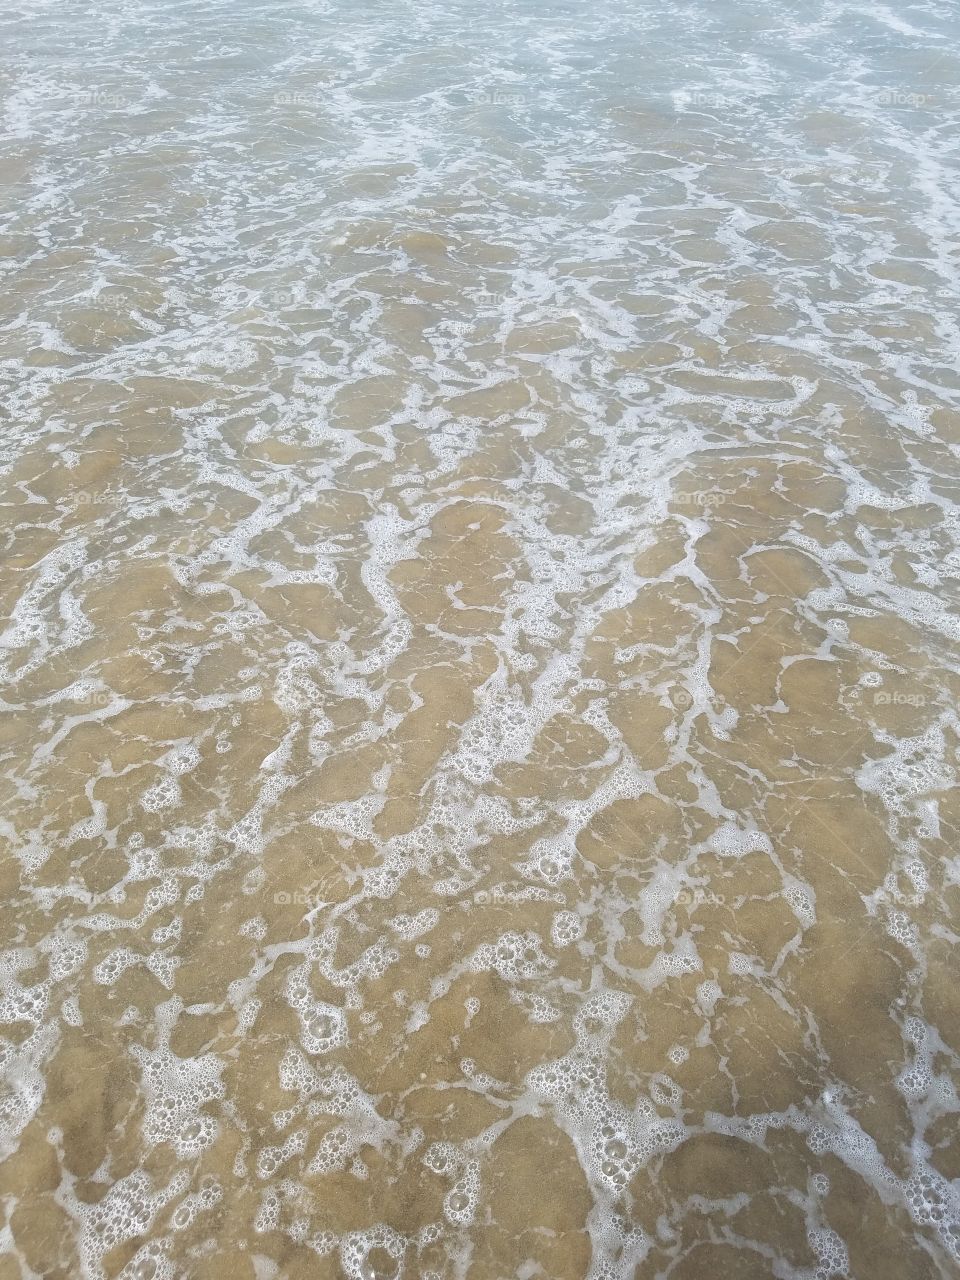 ocean water